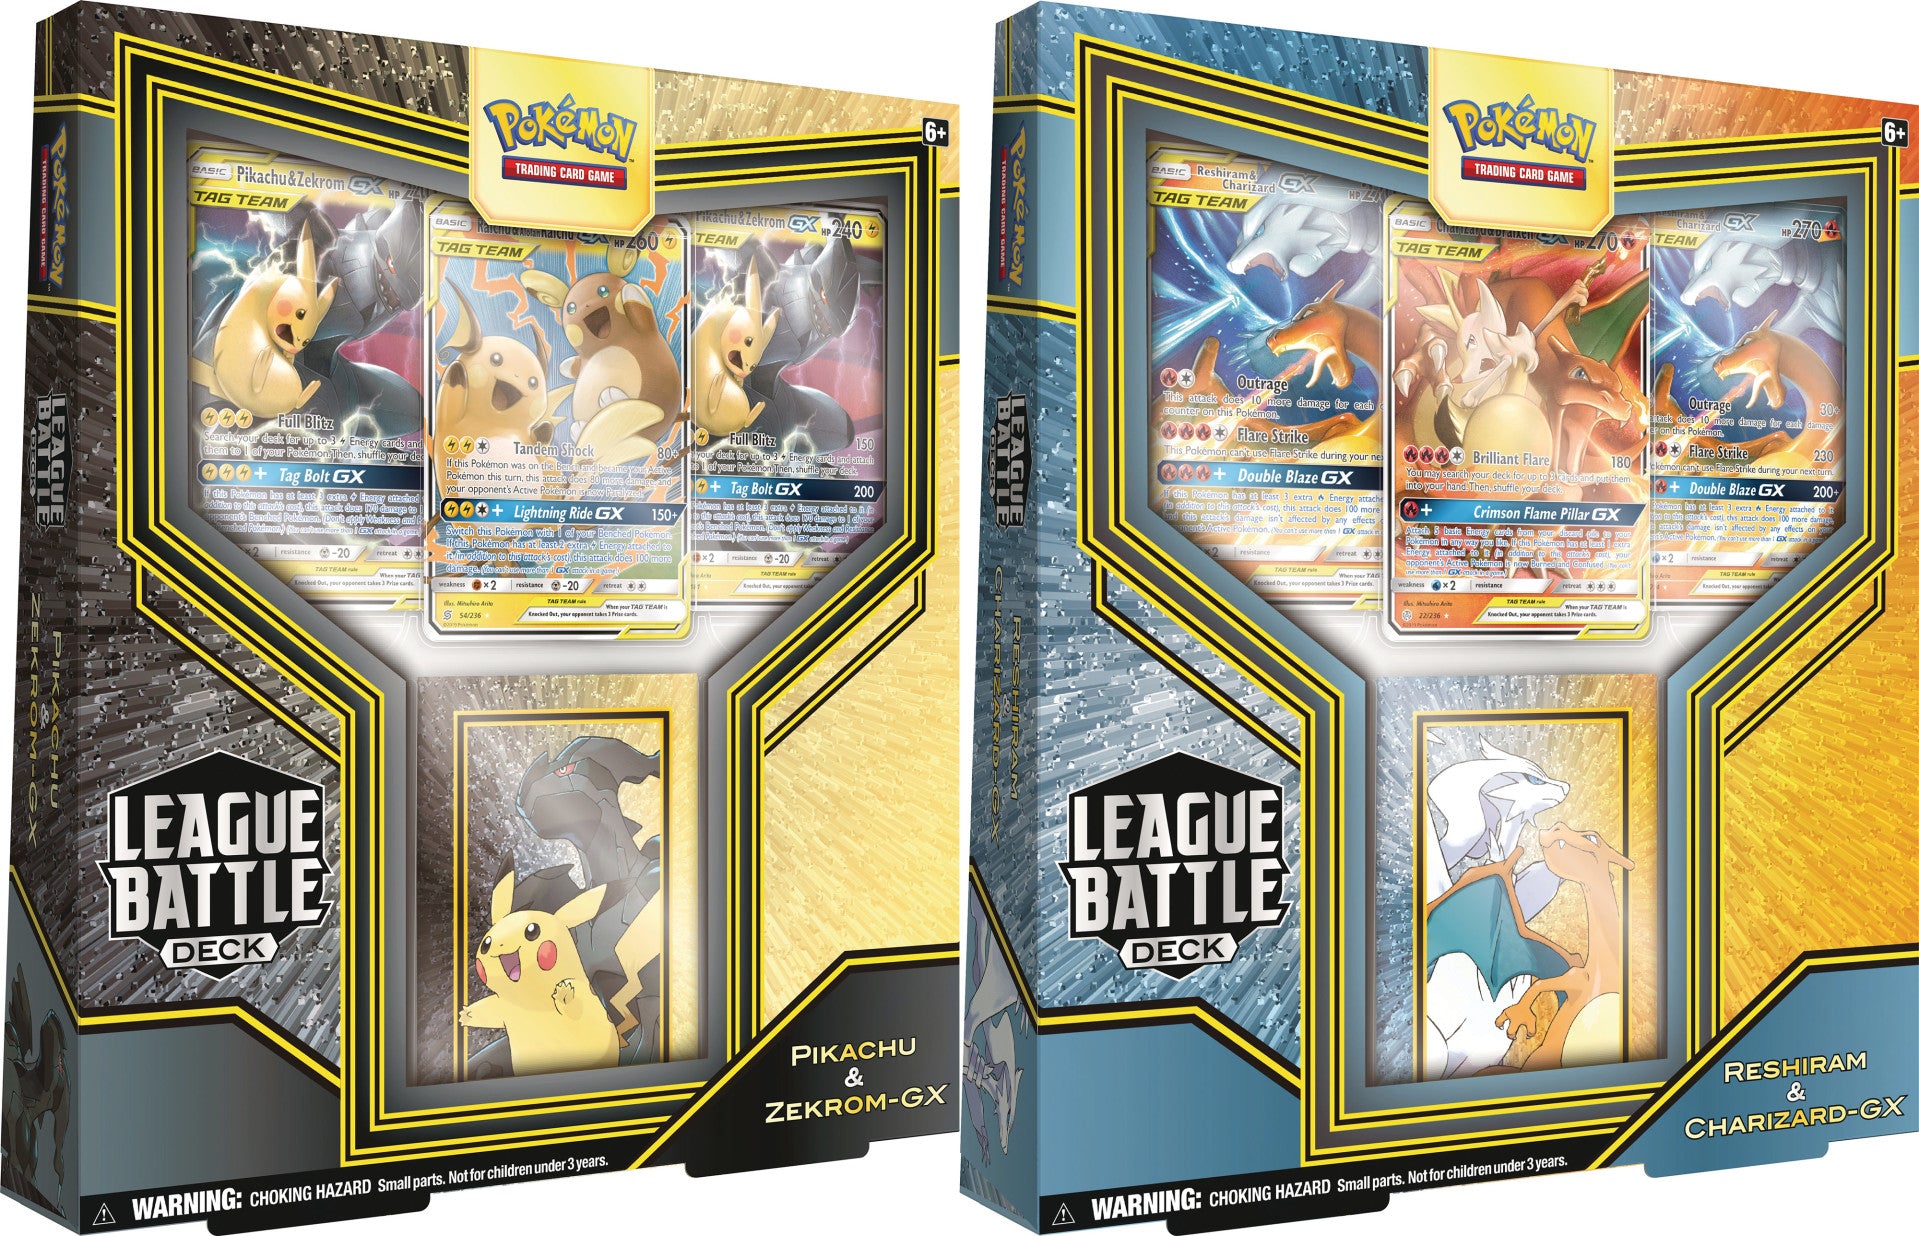 Pokémon TCG: Reshiram & Charizard-GX League Battle Deck